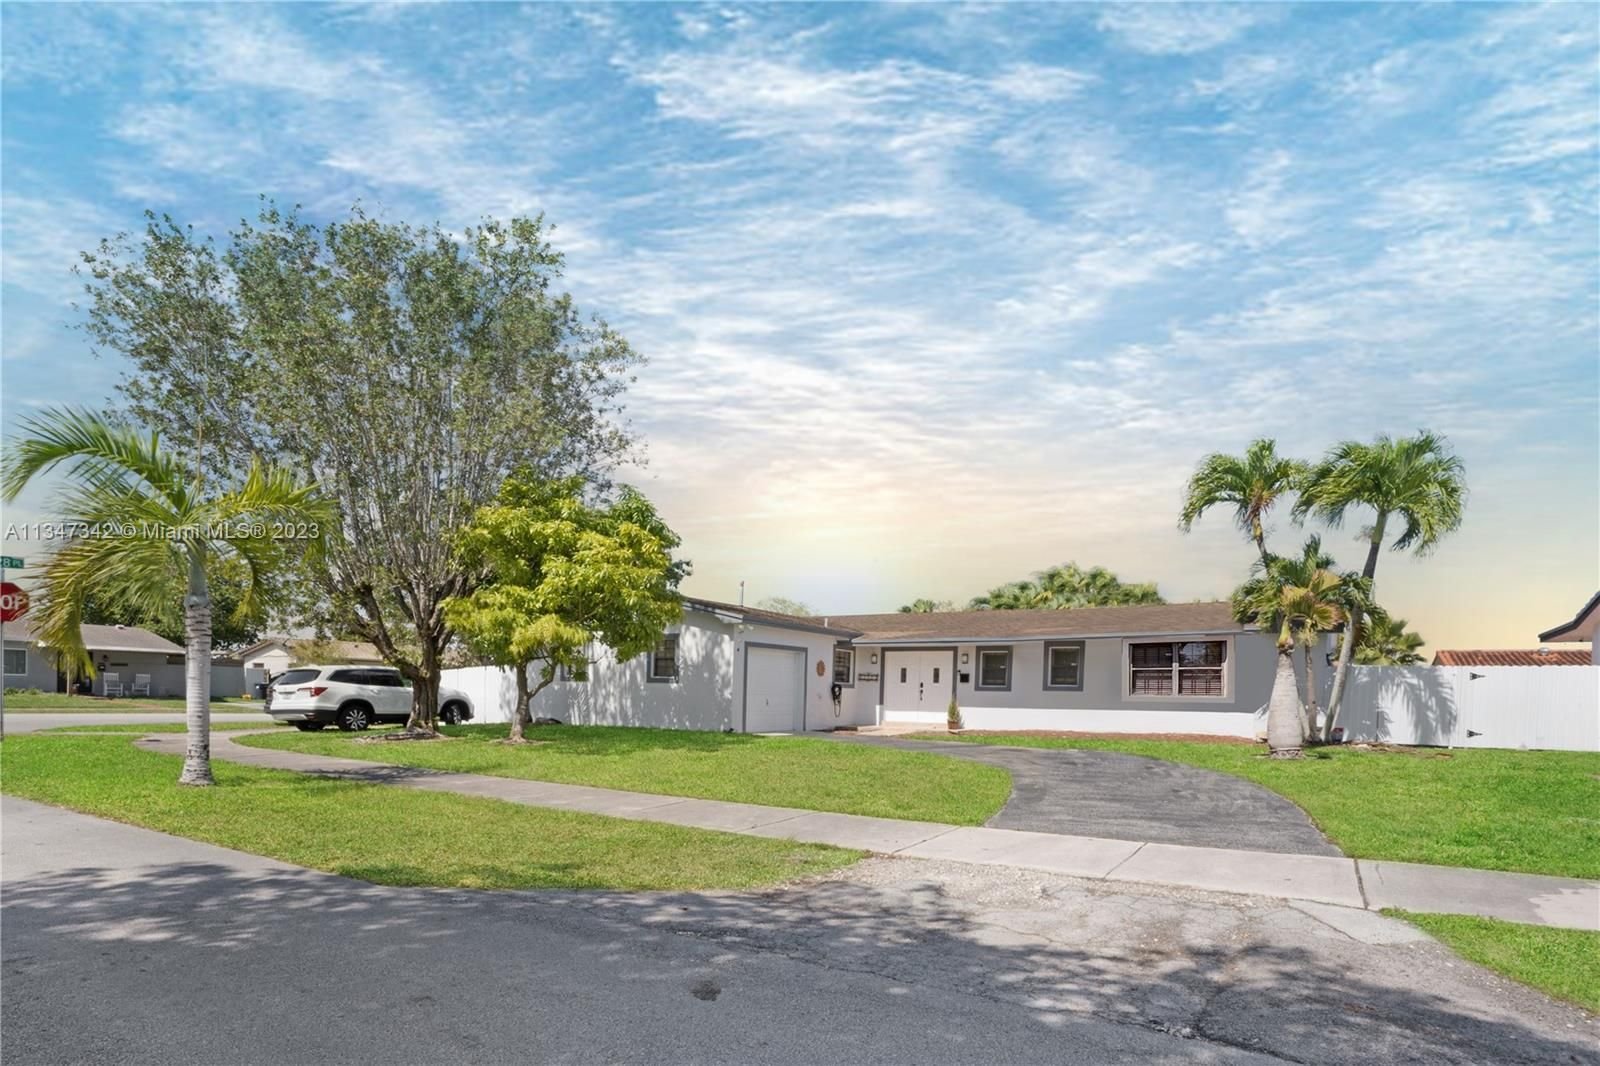 Real estate property located at 12843 48th Ter, Miami-Dade County, Miami, FL